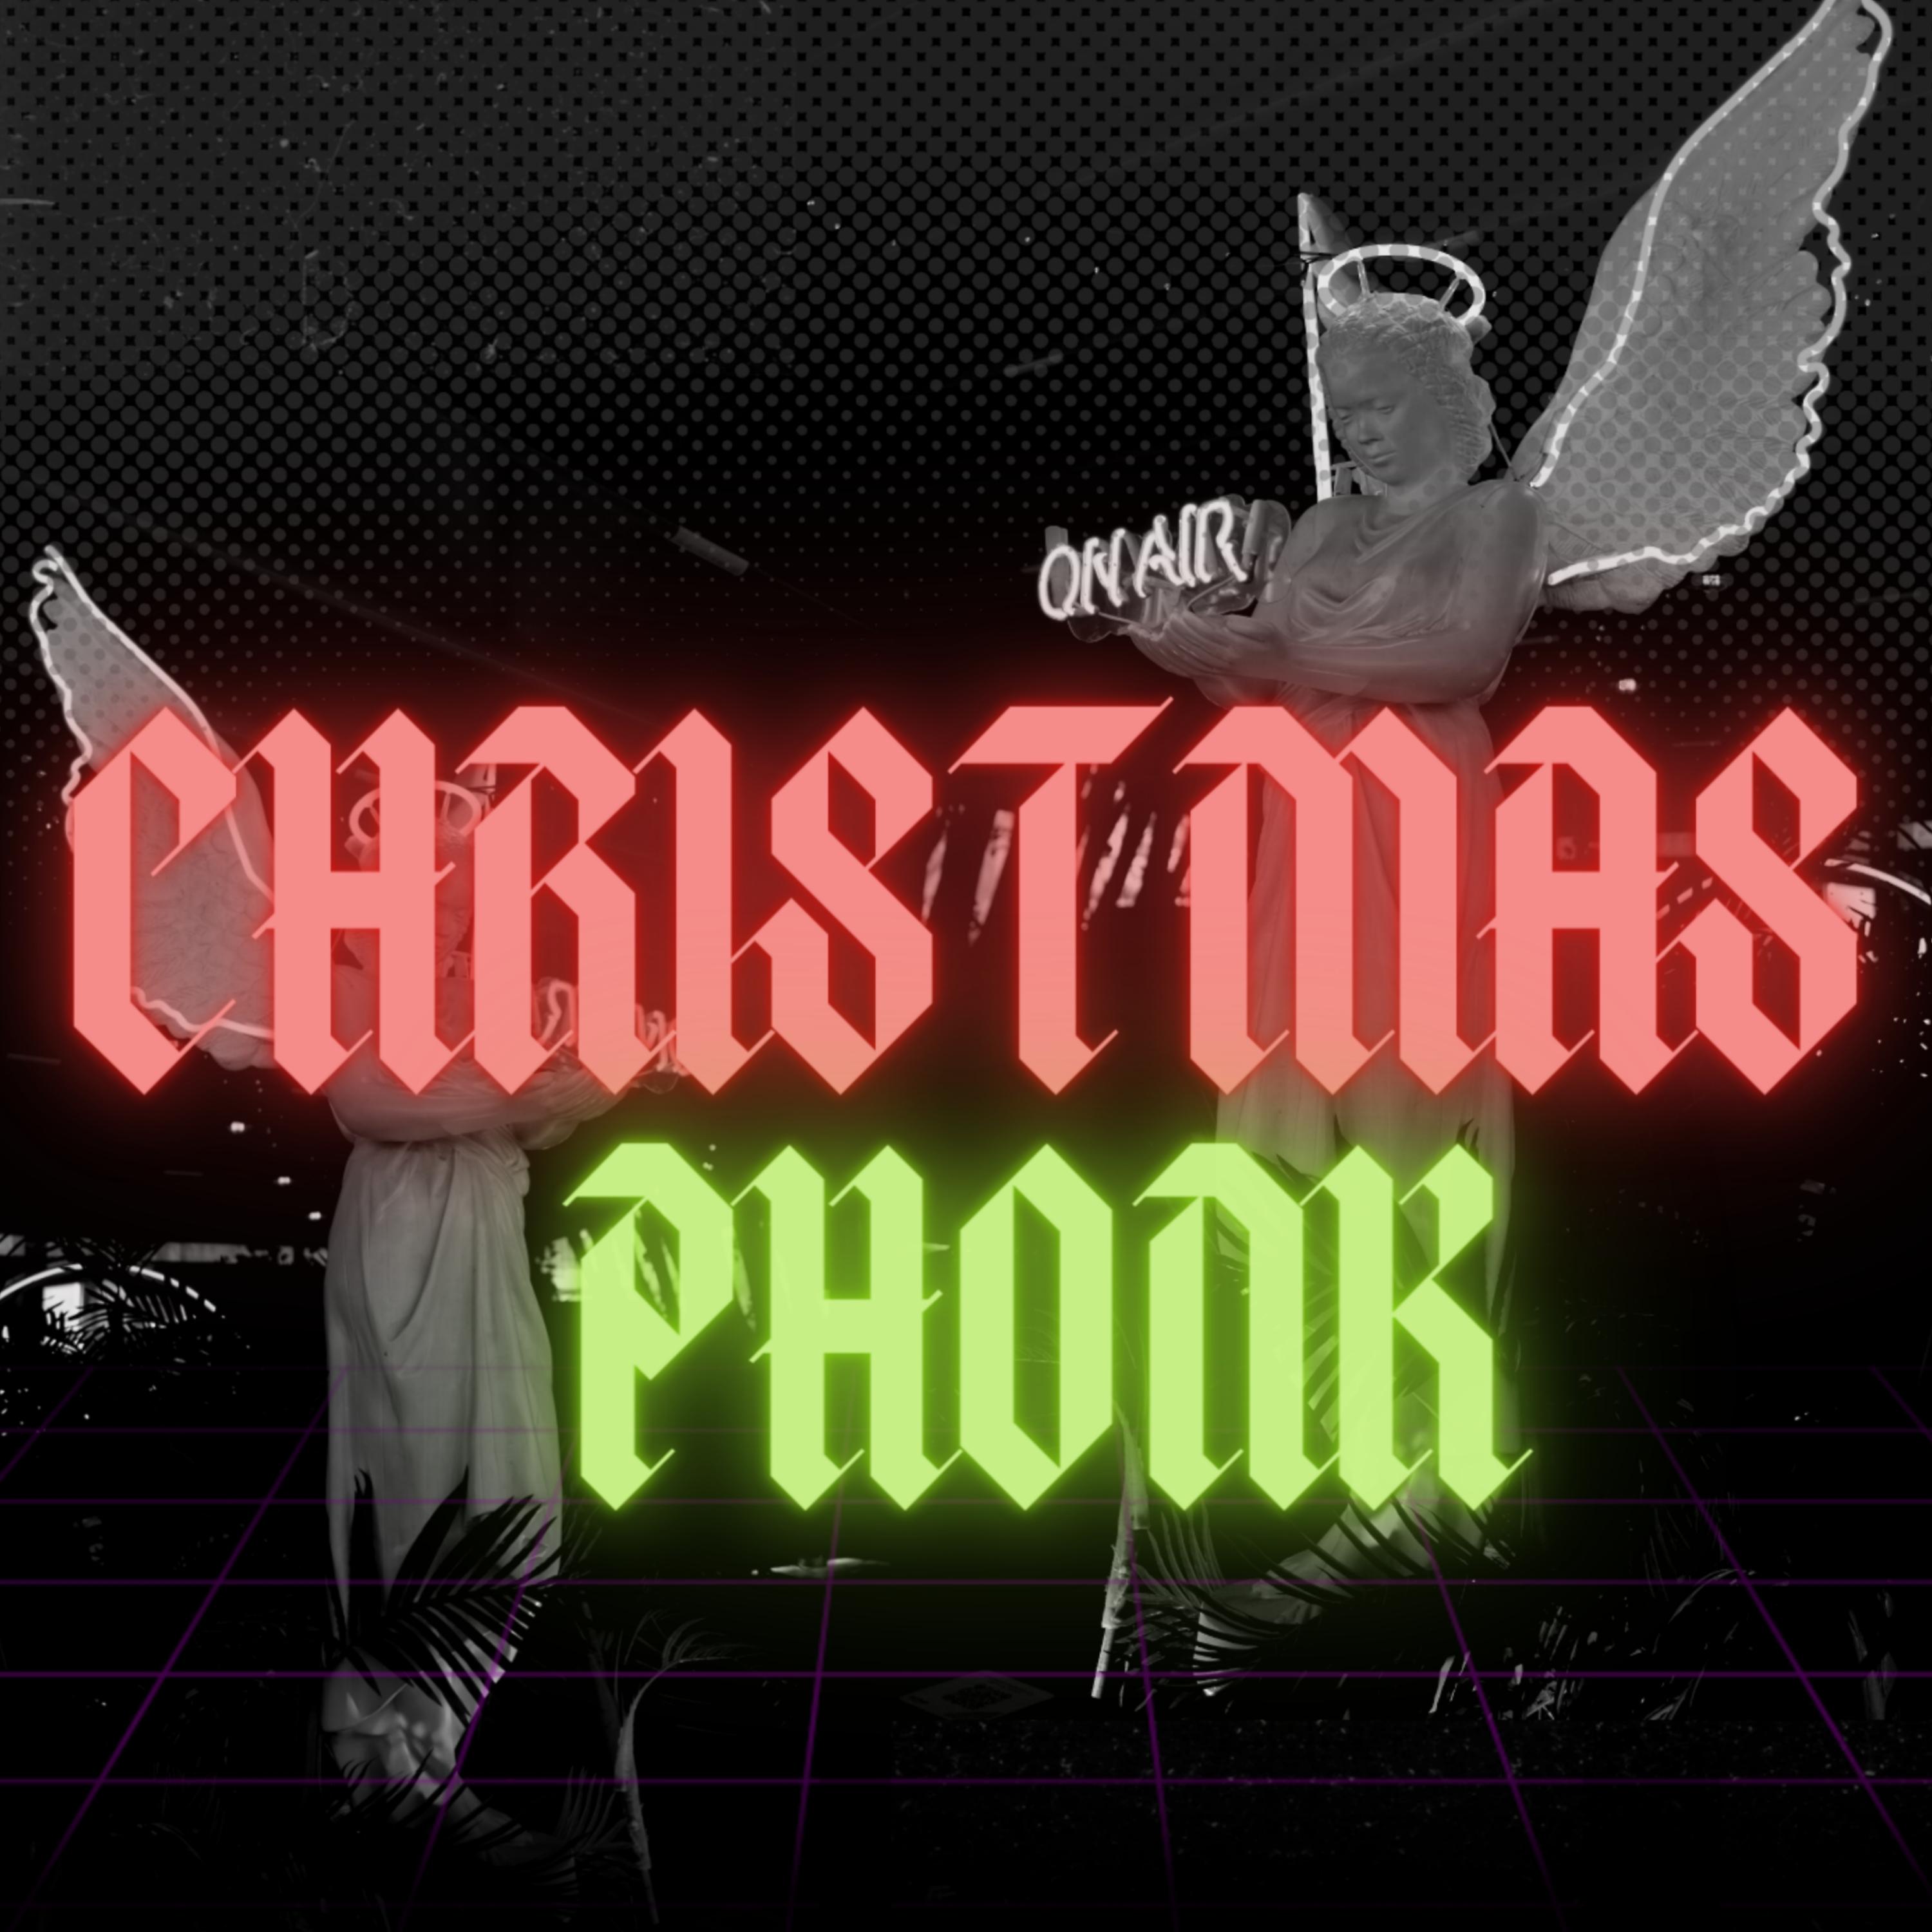 Постер альбома Christmas Phonk